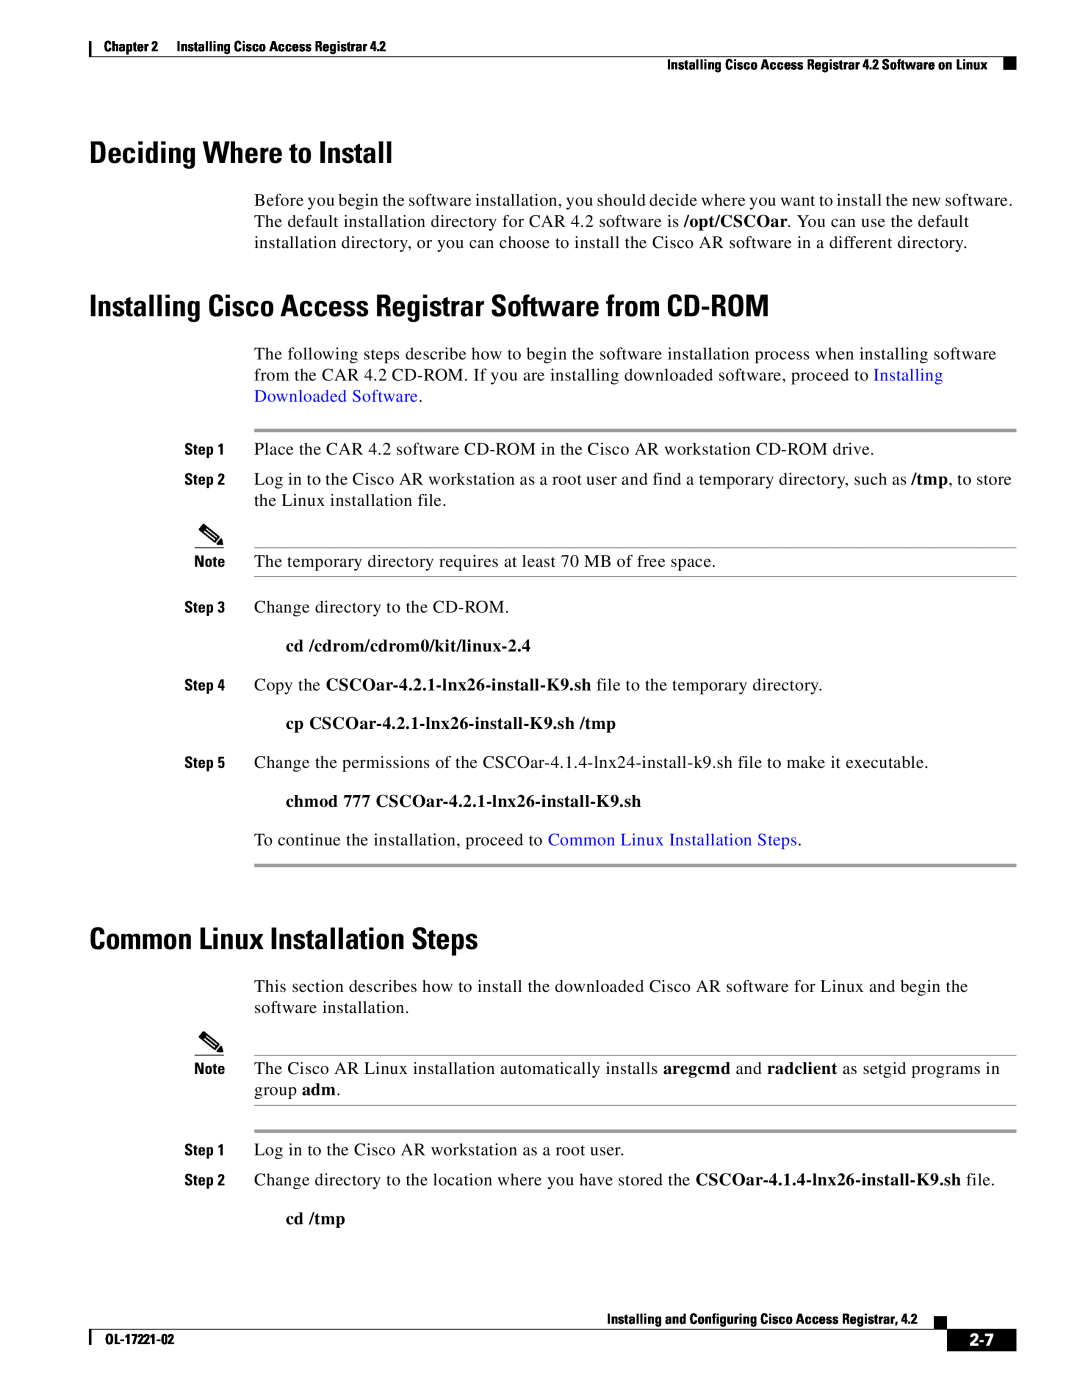 Cisco Systems 4.2 manual Common Linux Installation Steps, cd /cdrom/cdrom0/kit/linux-2.4, Deciding Where to Install 